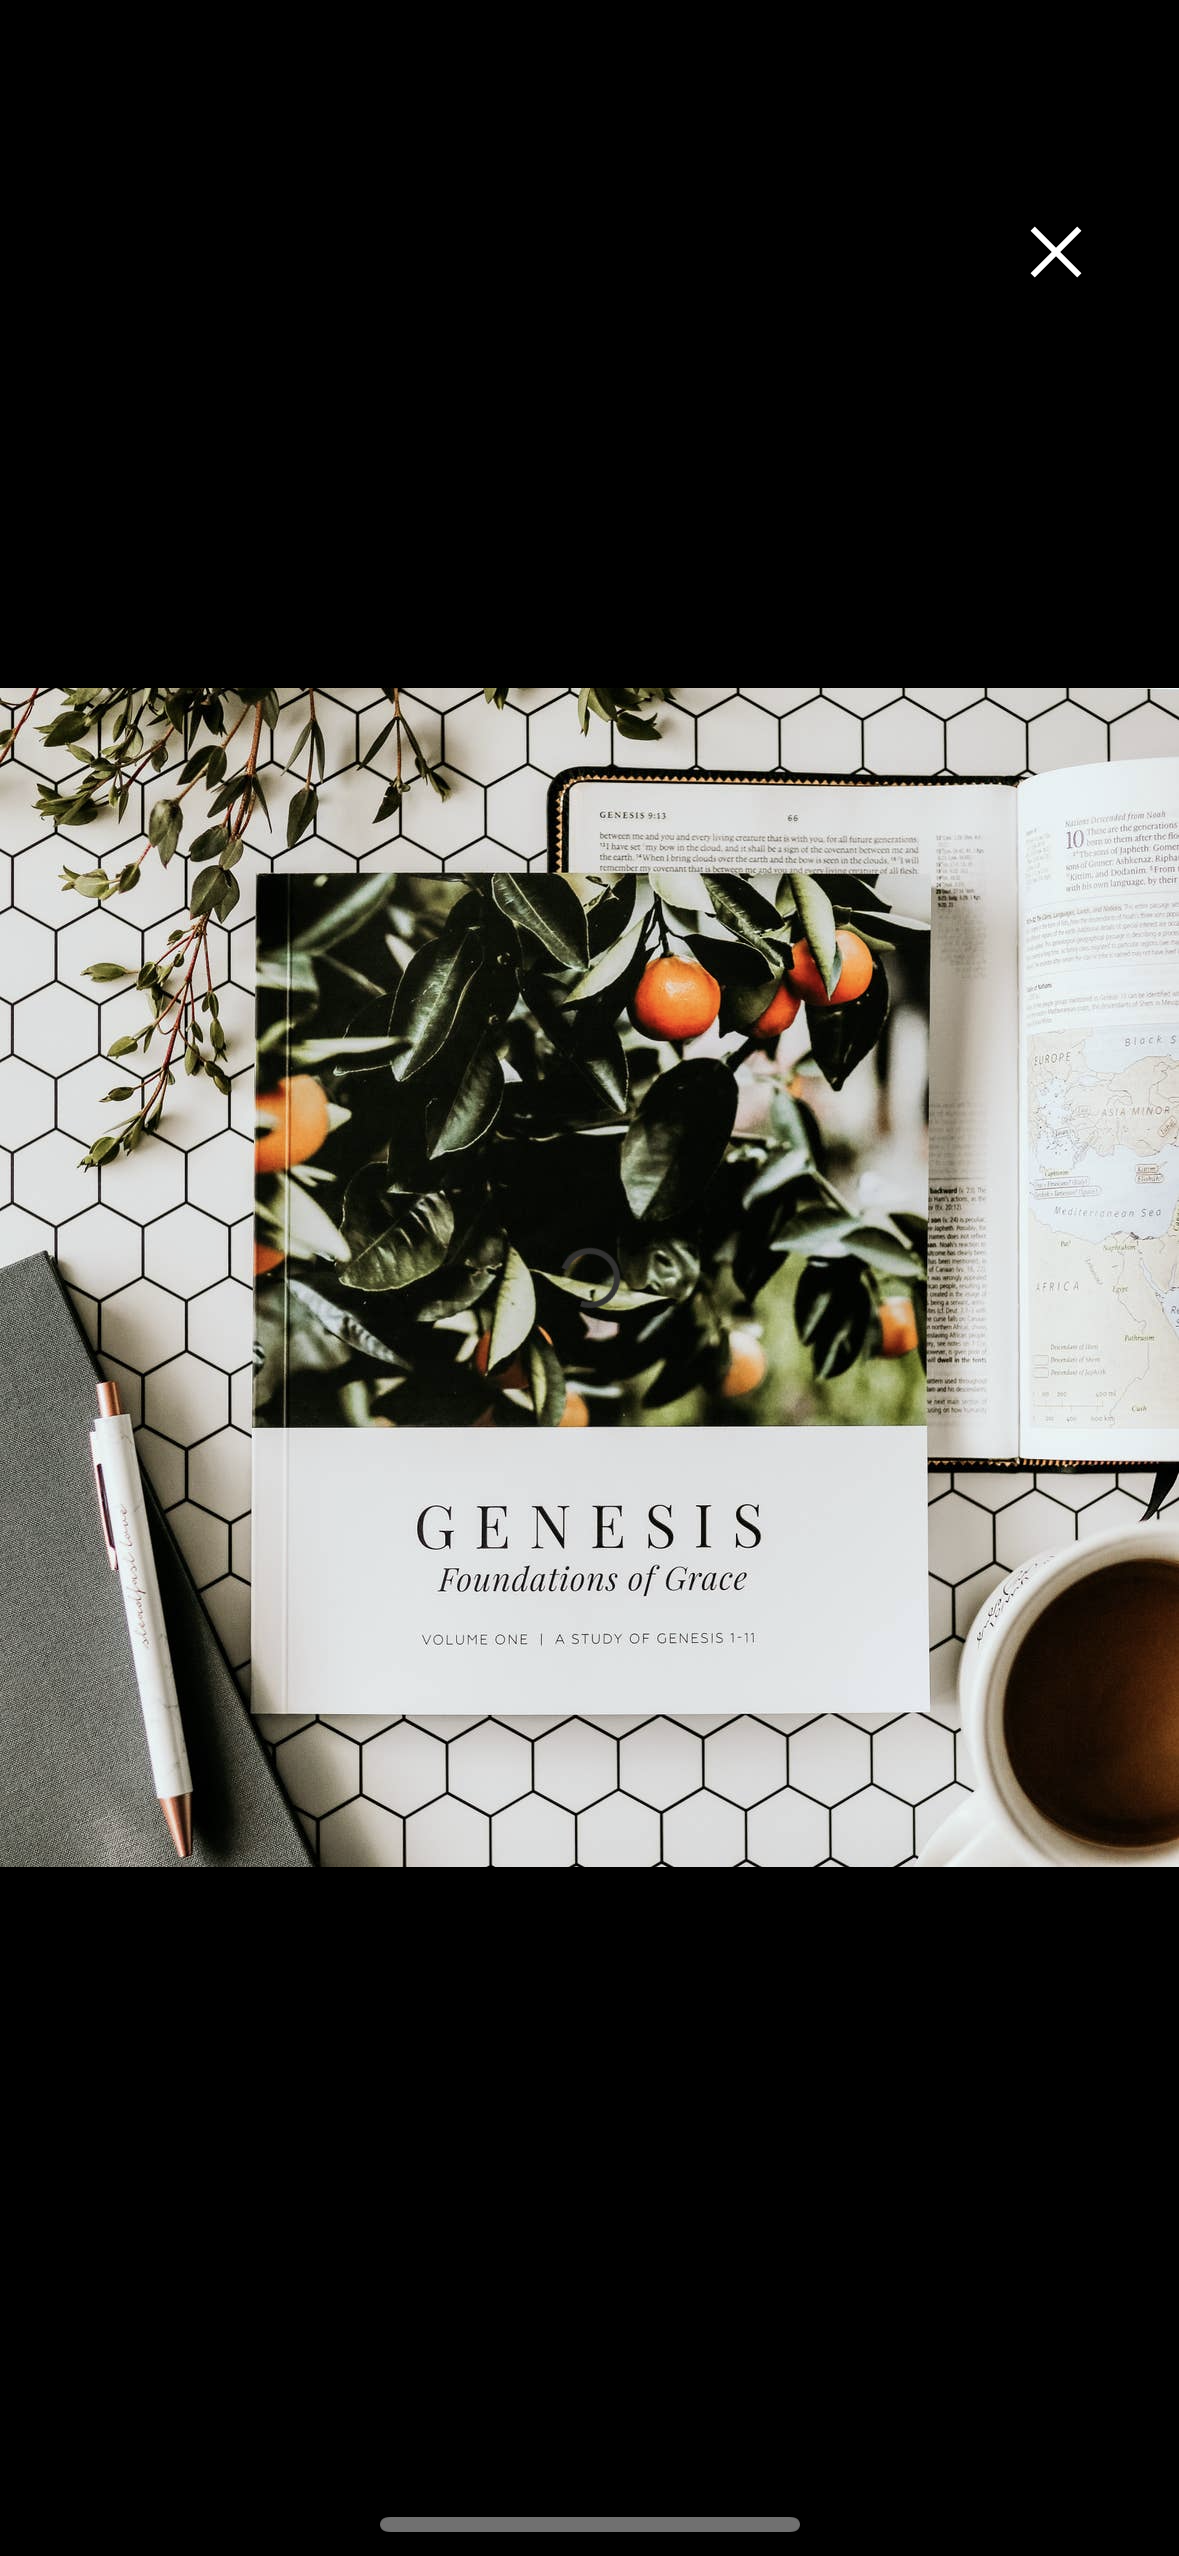 Genesis: Foundations of Grace